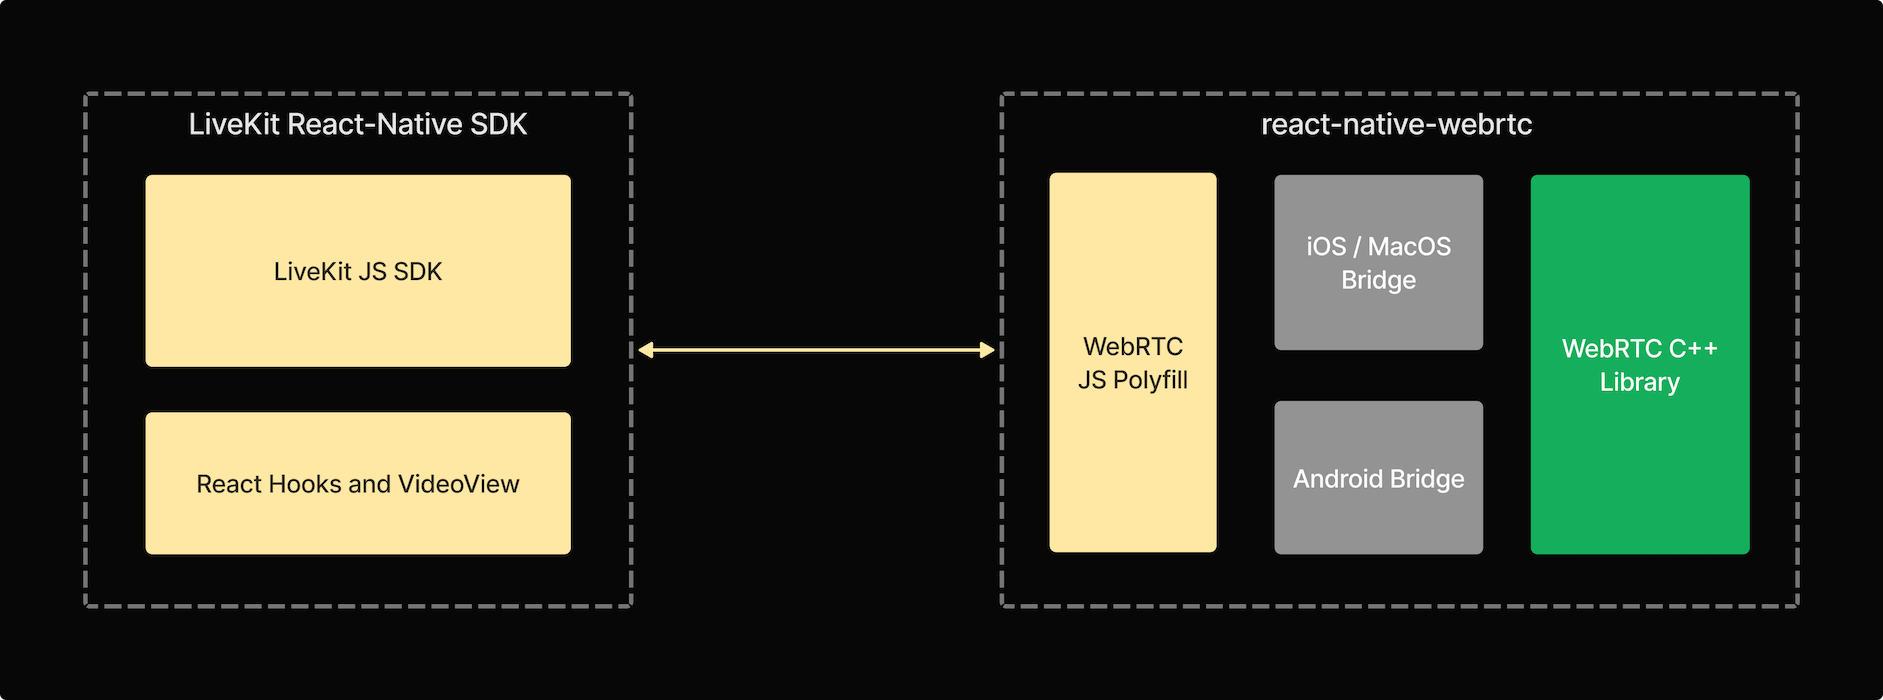 React Native SDK architecture diagram